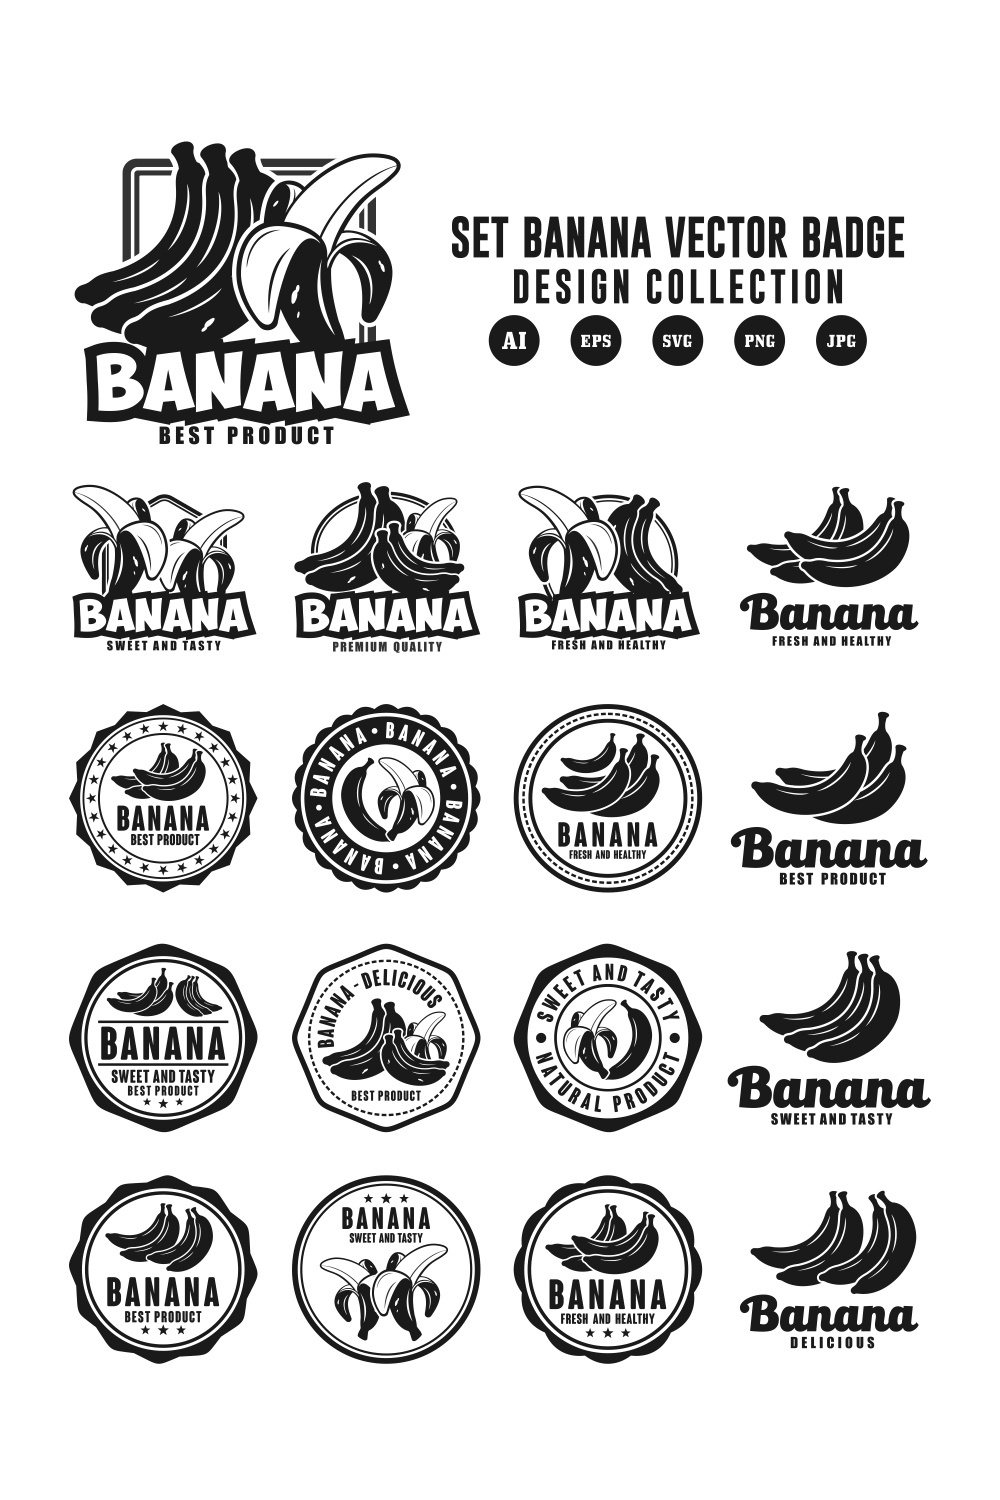 Set Banana vector design collection - $8 pinterest preview image.